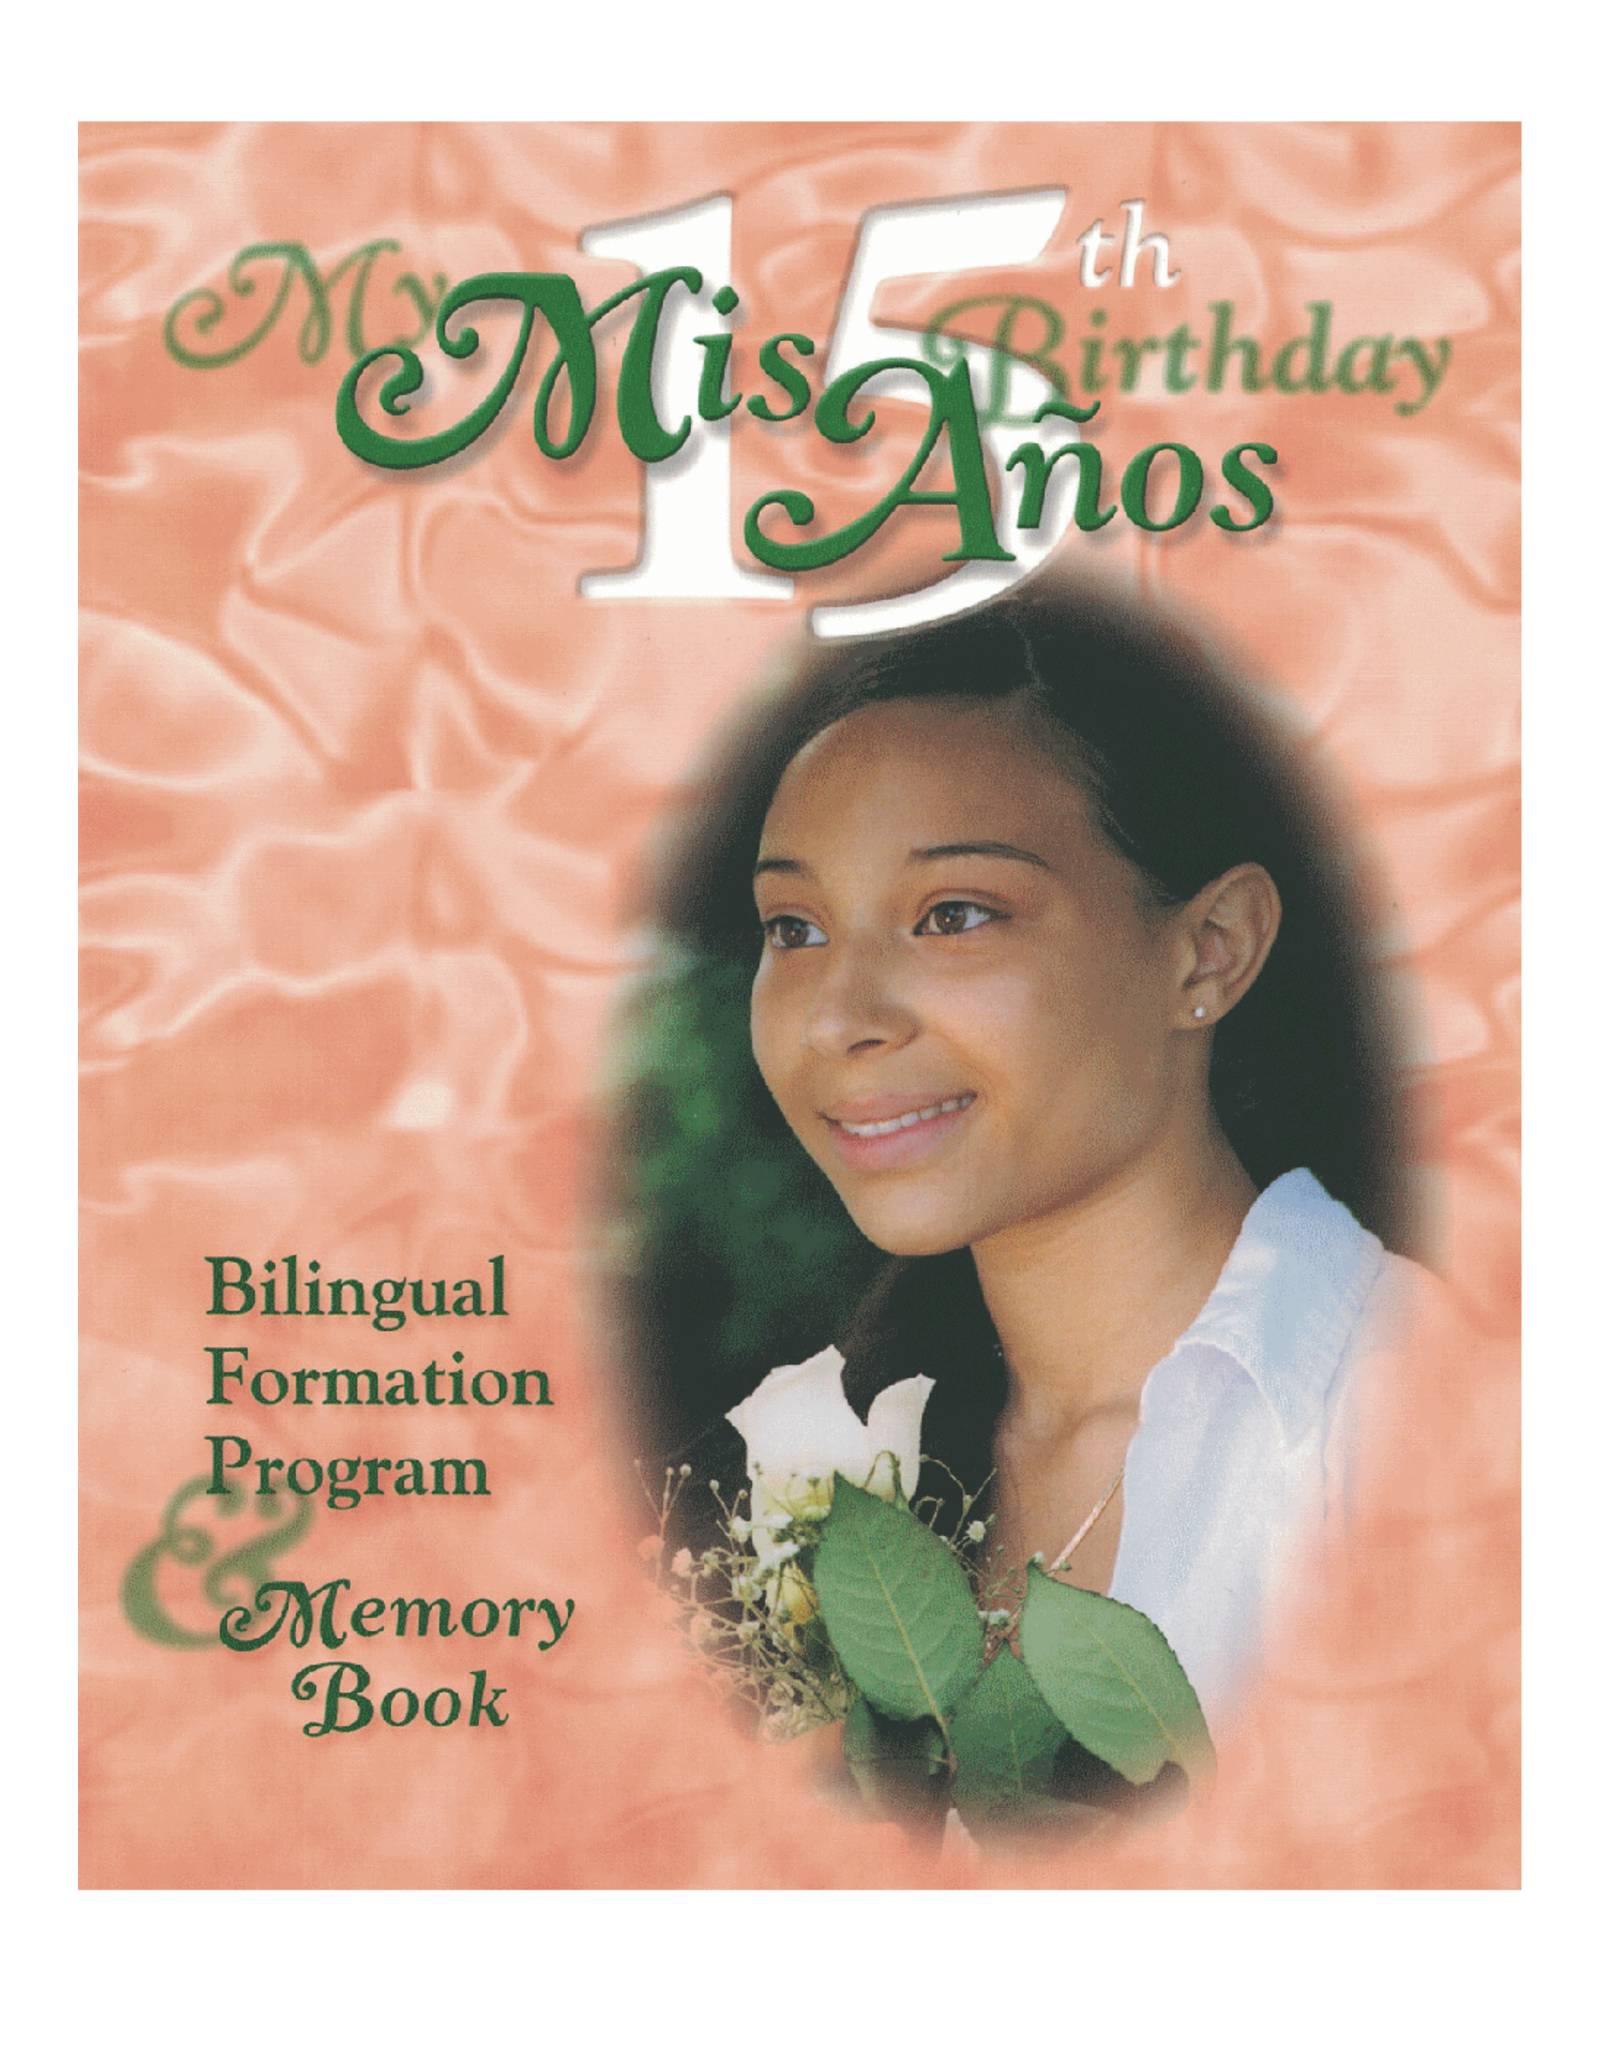 Paulinas Distribuidora Mis 15 Anos/My 15 Birthday Bilingual Formation Program & Memory Book